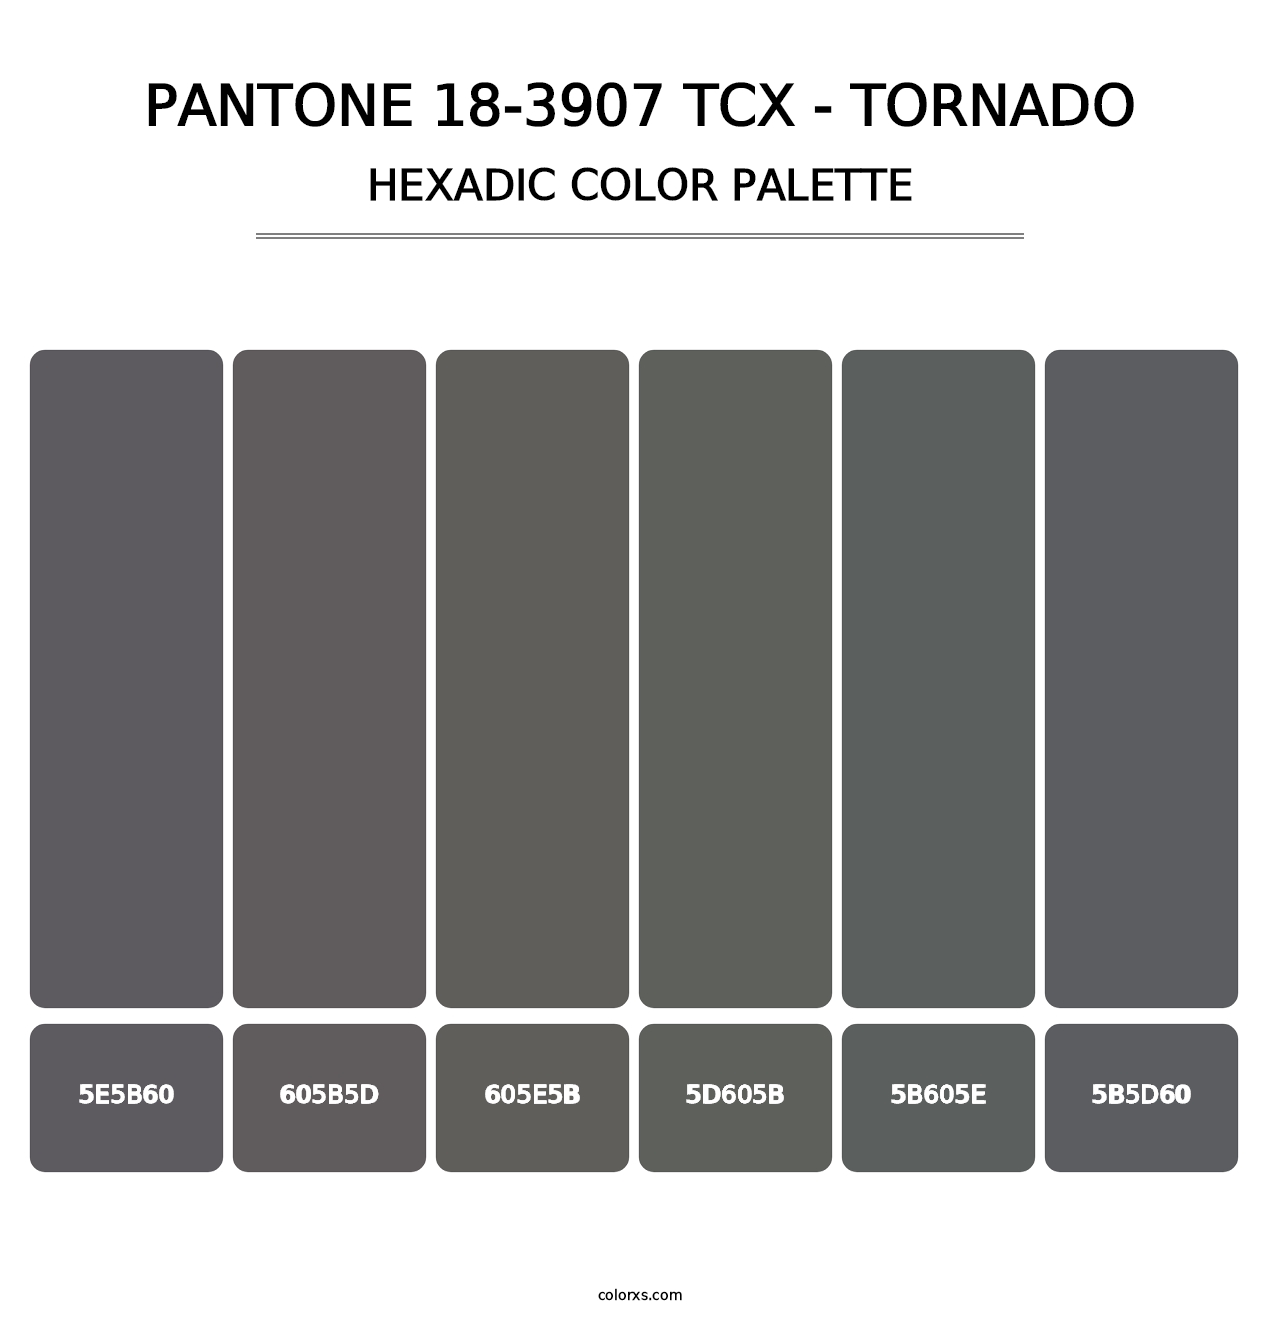 PANTONE 18-3907 TCX - Tornado - Hexadic Color Palette